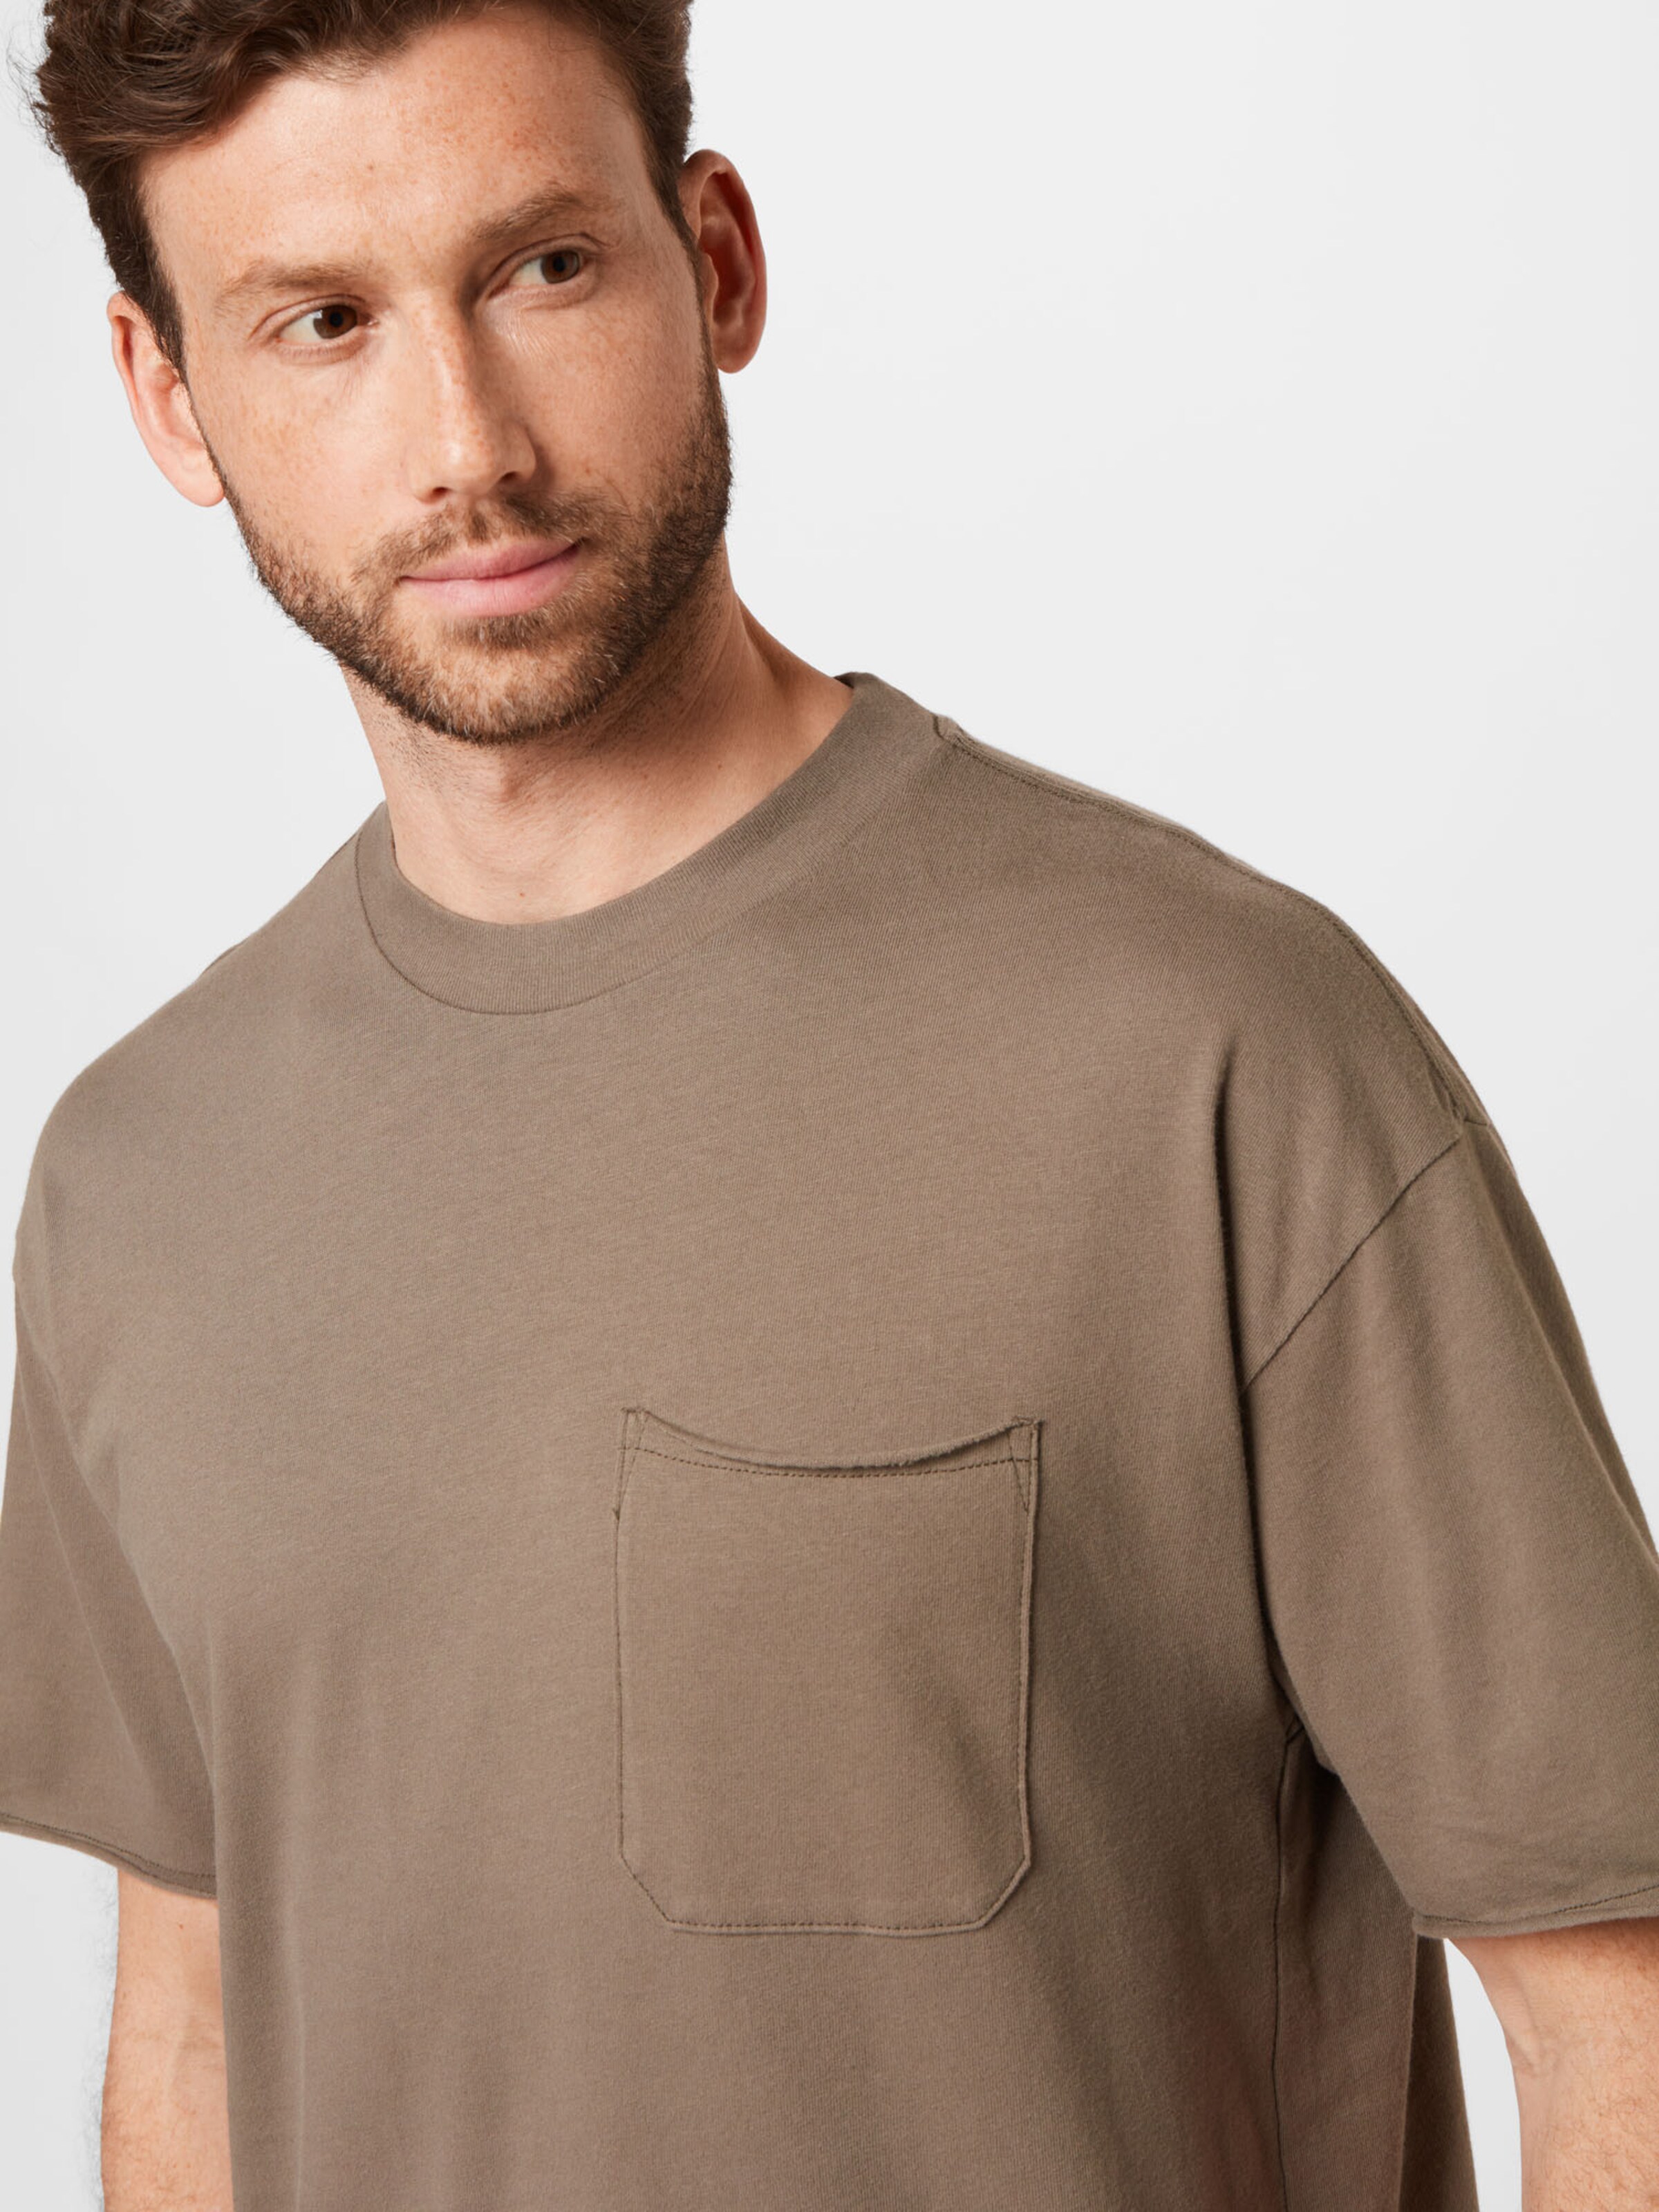 Männer Shirts Abercrombie & Fitch T-Shirt in Khaki - XW15956